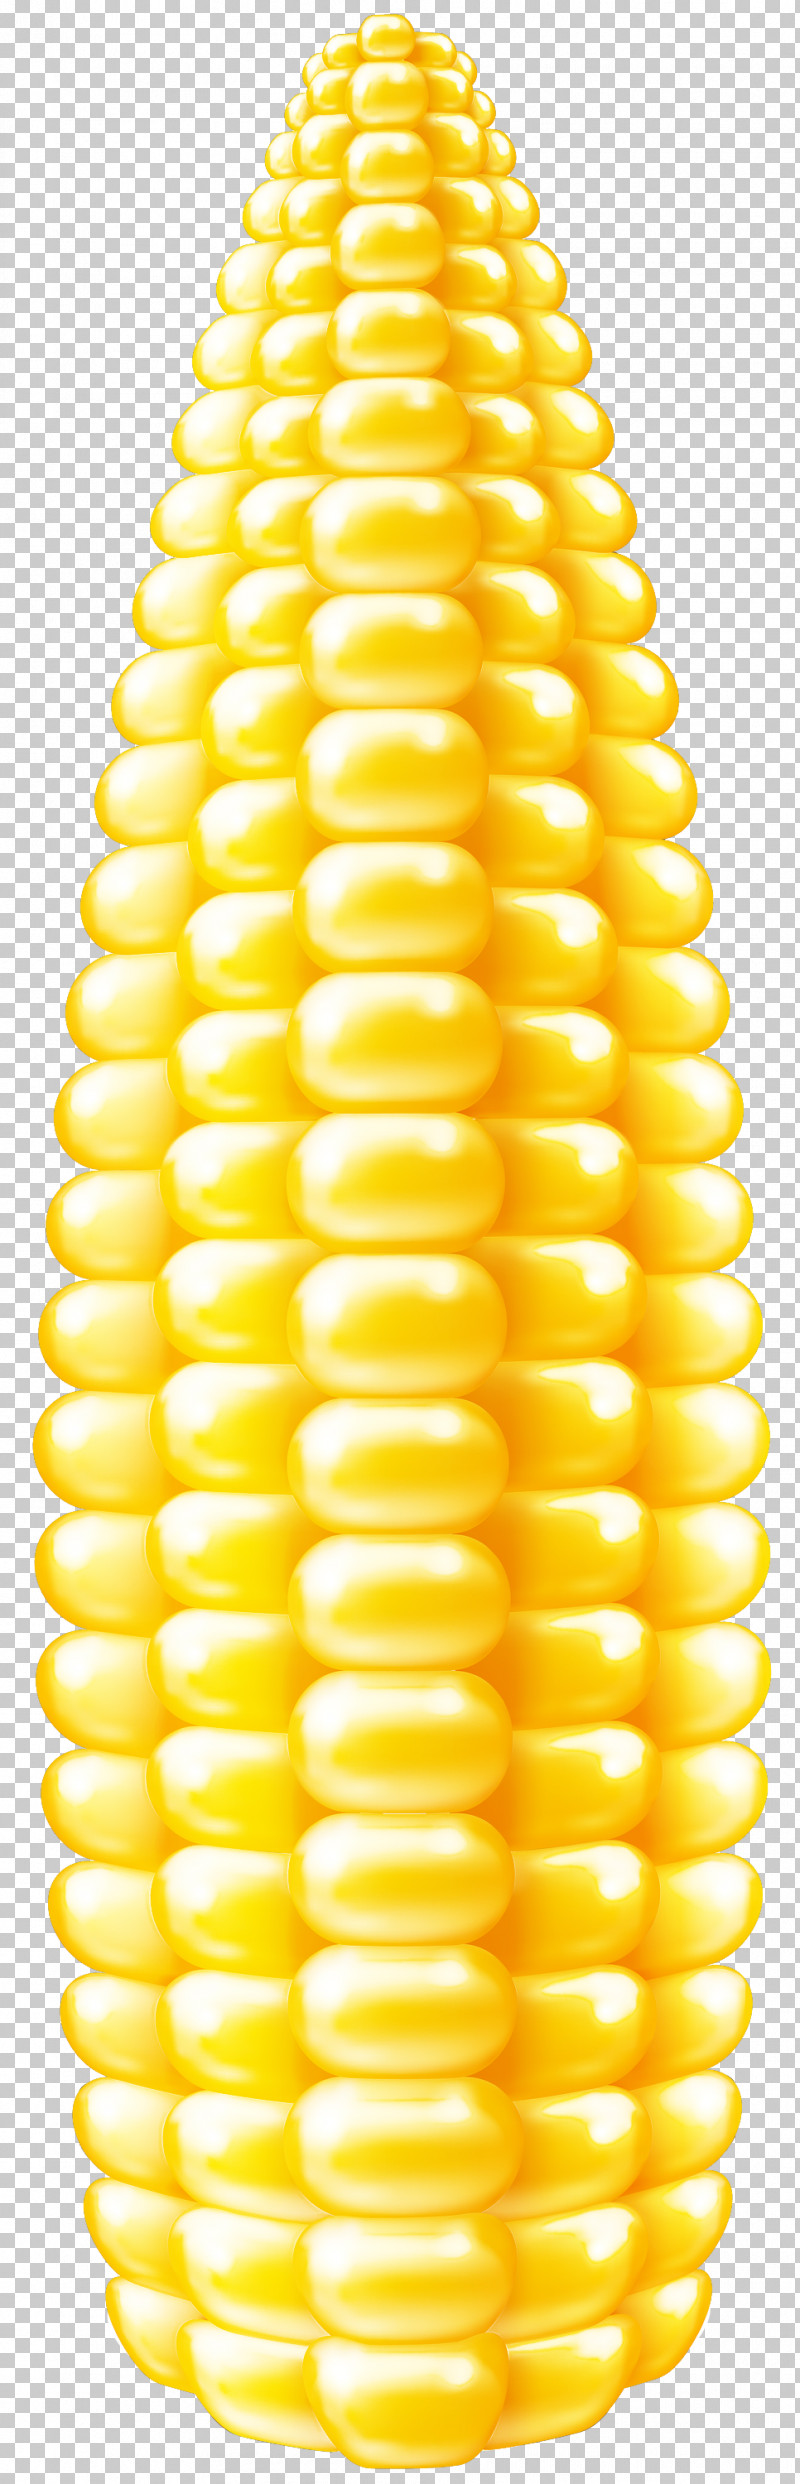 Yellow Corn Kernels Corn On The Cob Vegetarian Food Sweet Corn PNG, Clipart, Corn, Corn Kernels, Corn On The Cob, Food, Sweet Corn Free PNG Download